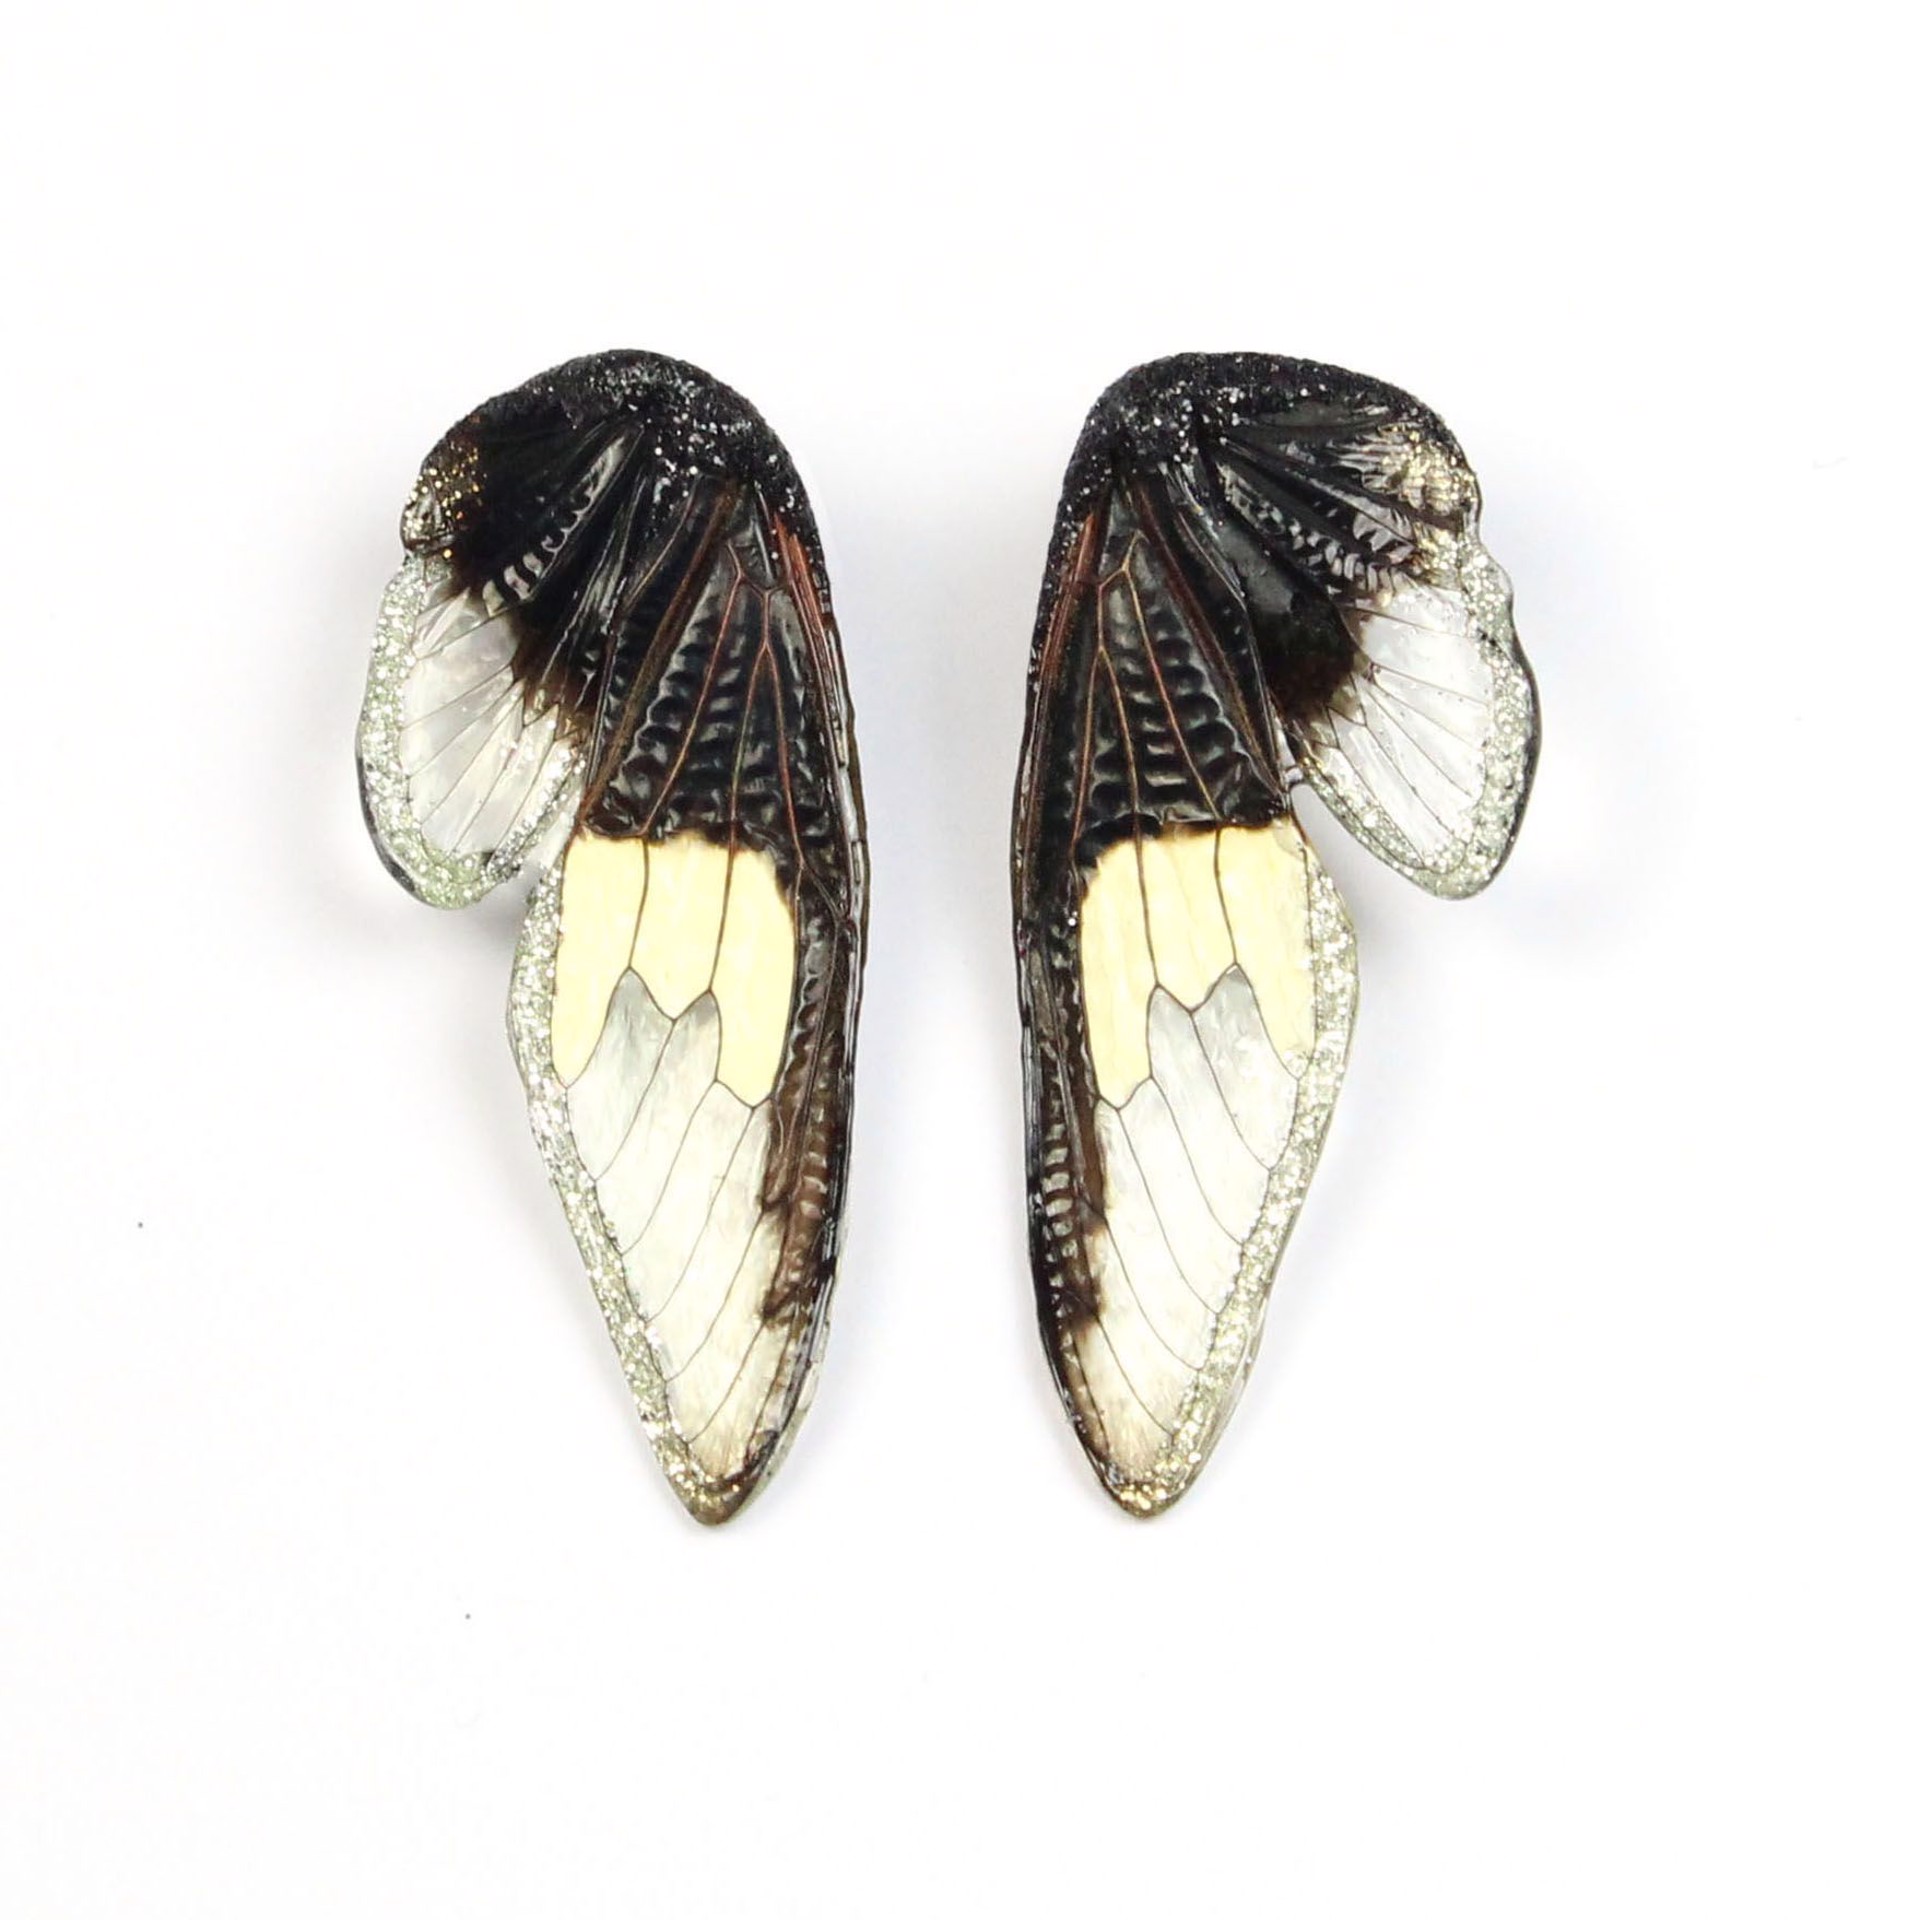 Black & White Cicada Earrings by Märta Mattsson